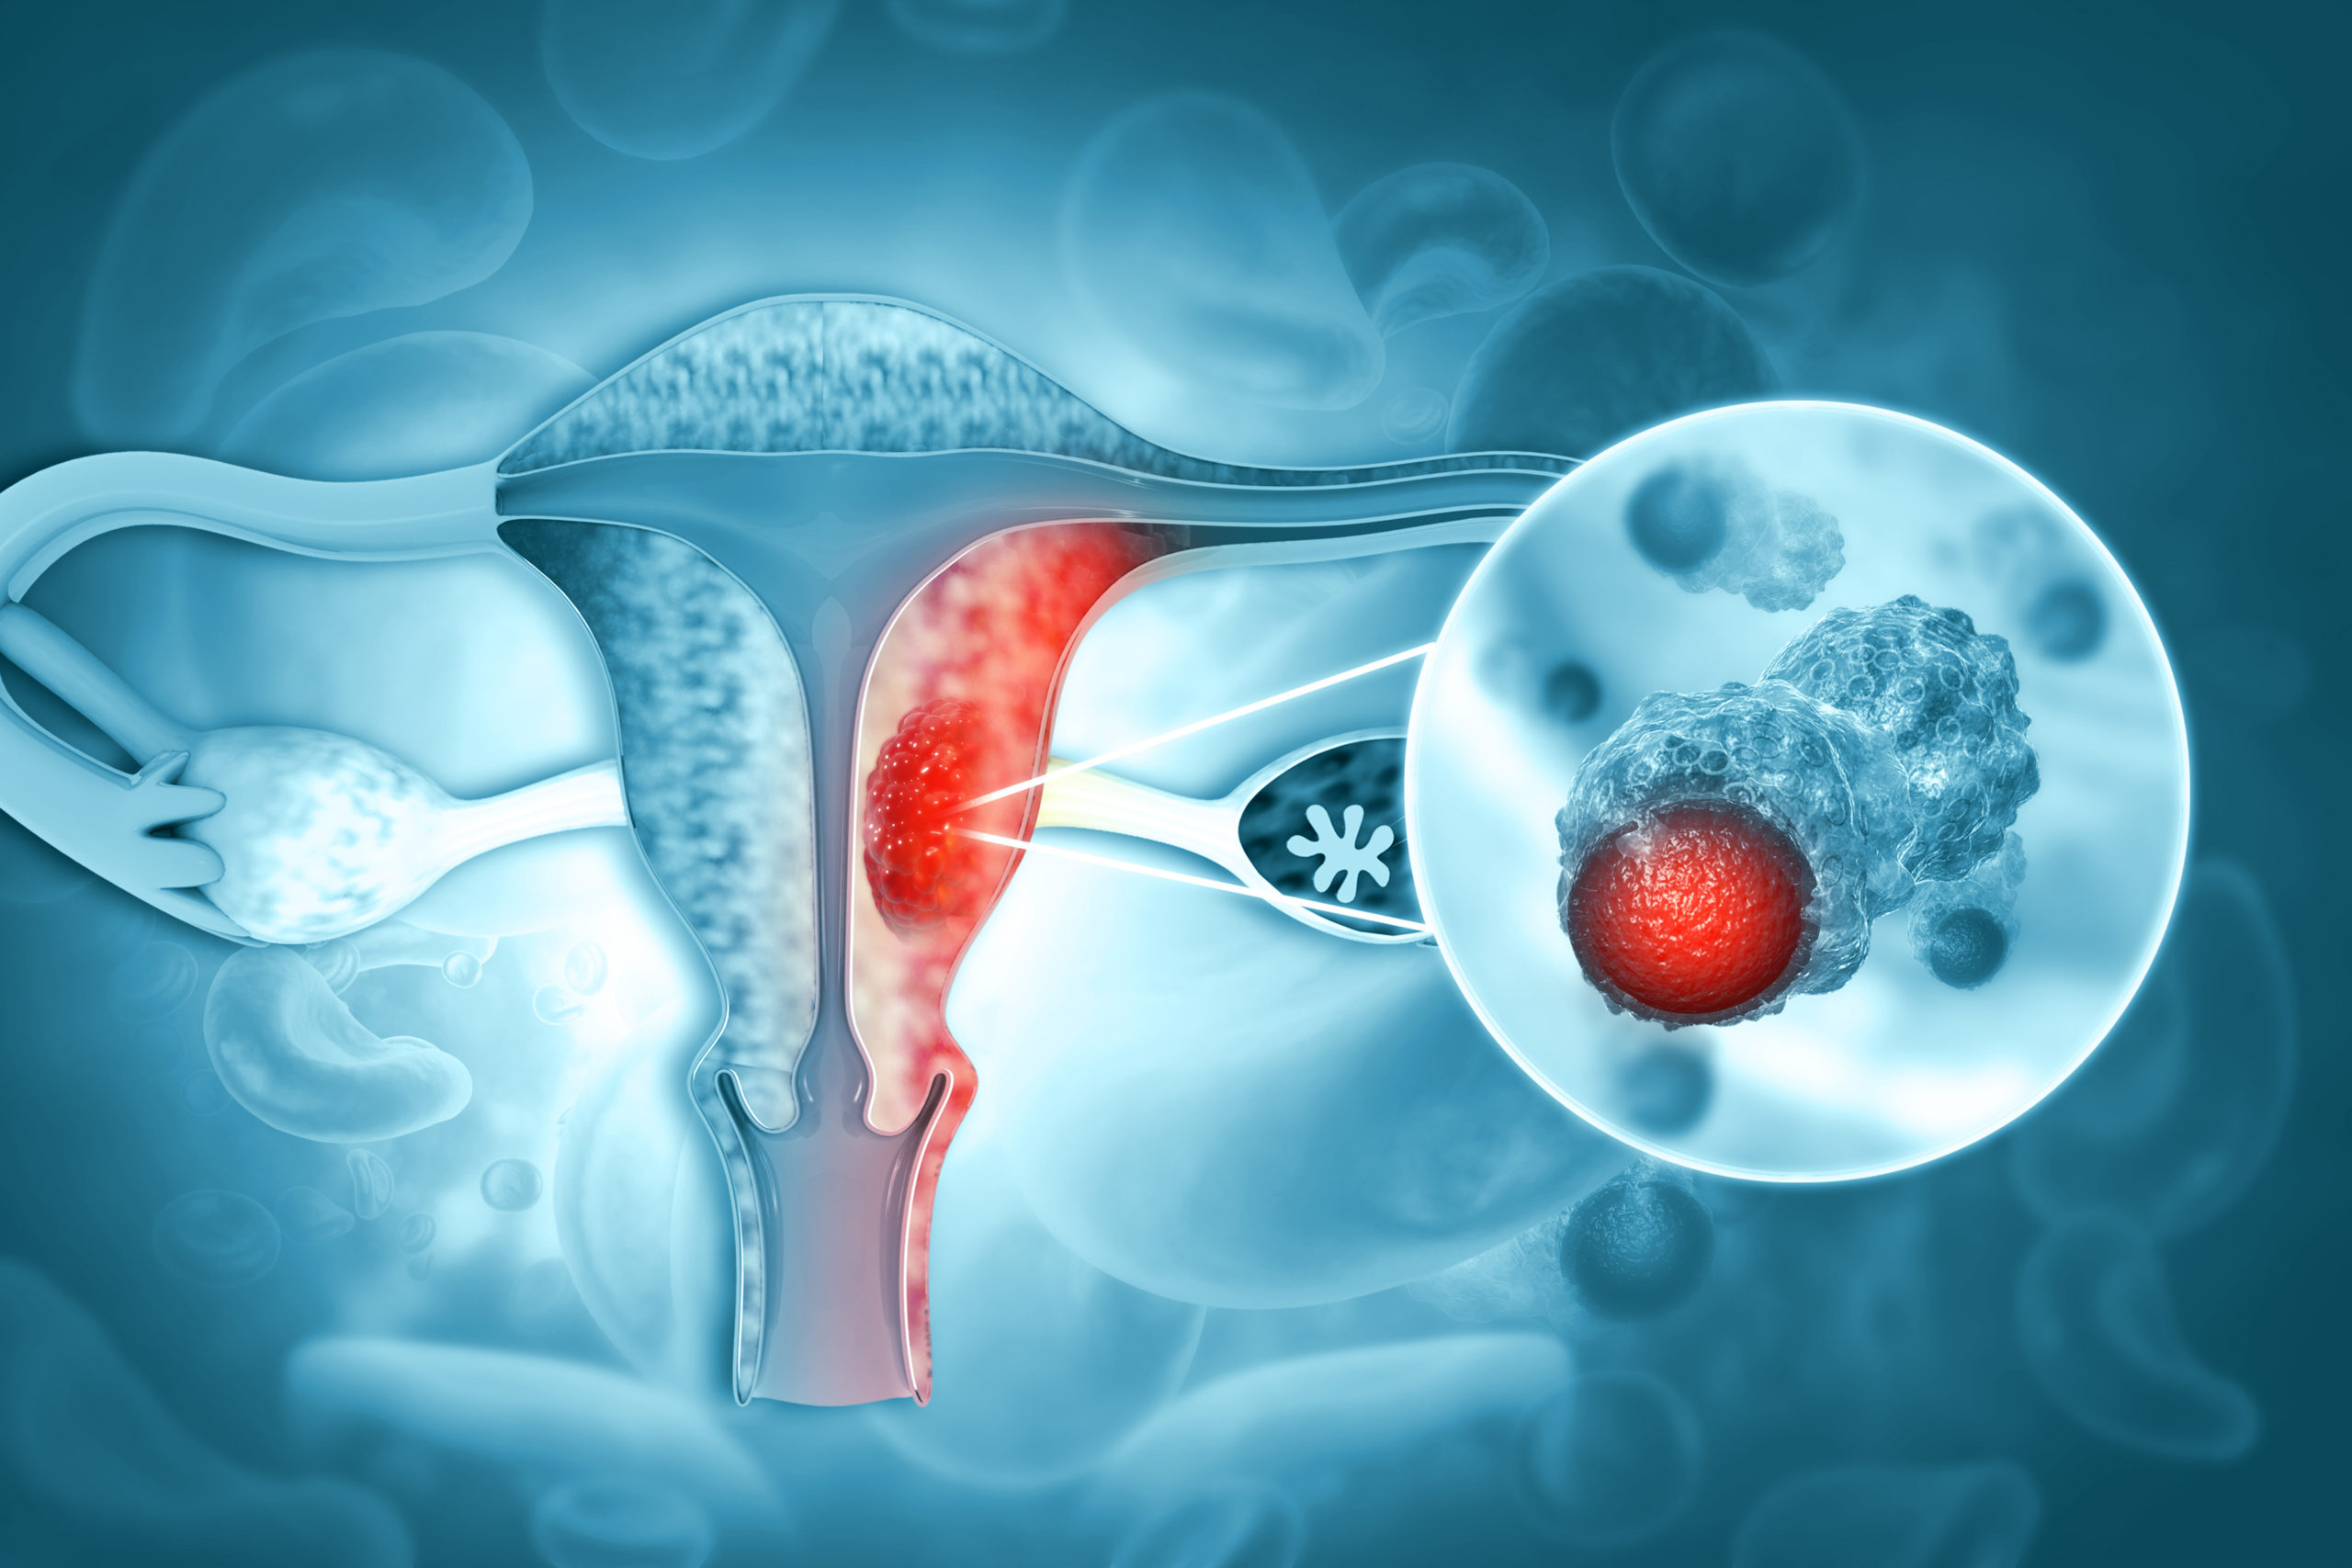 Biópsia Endometrial